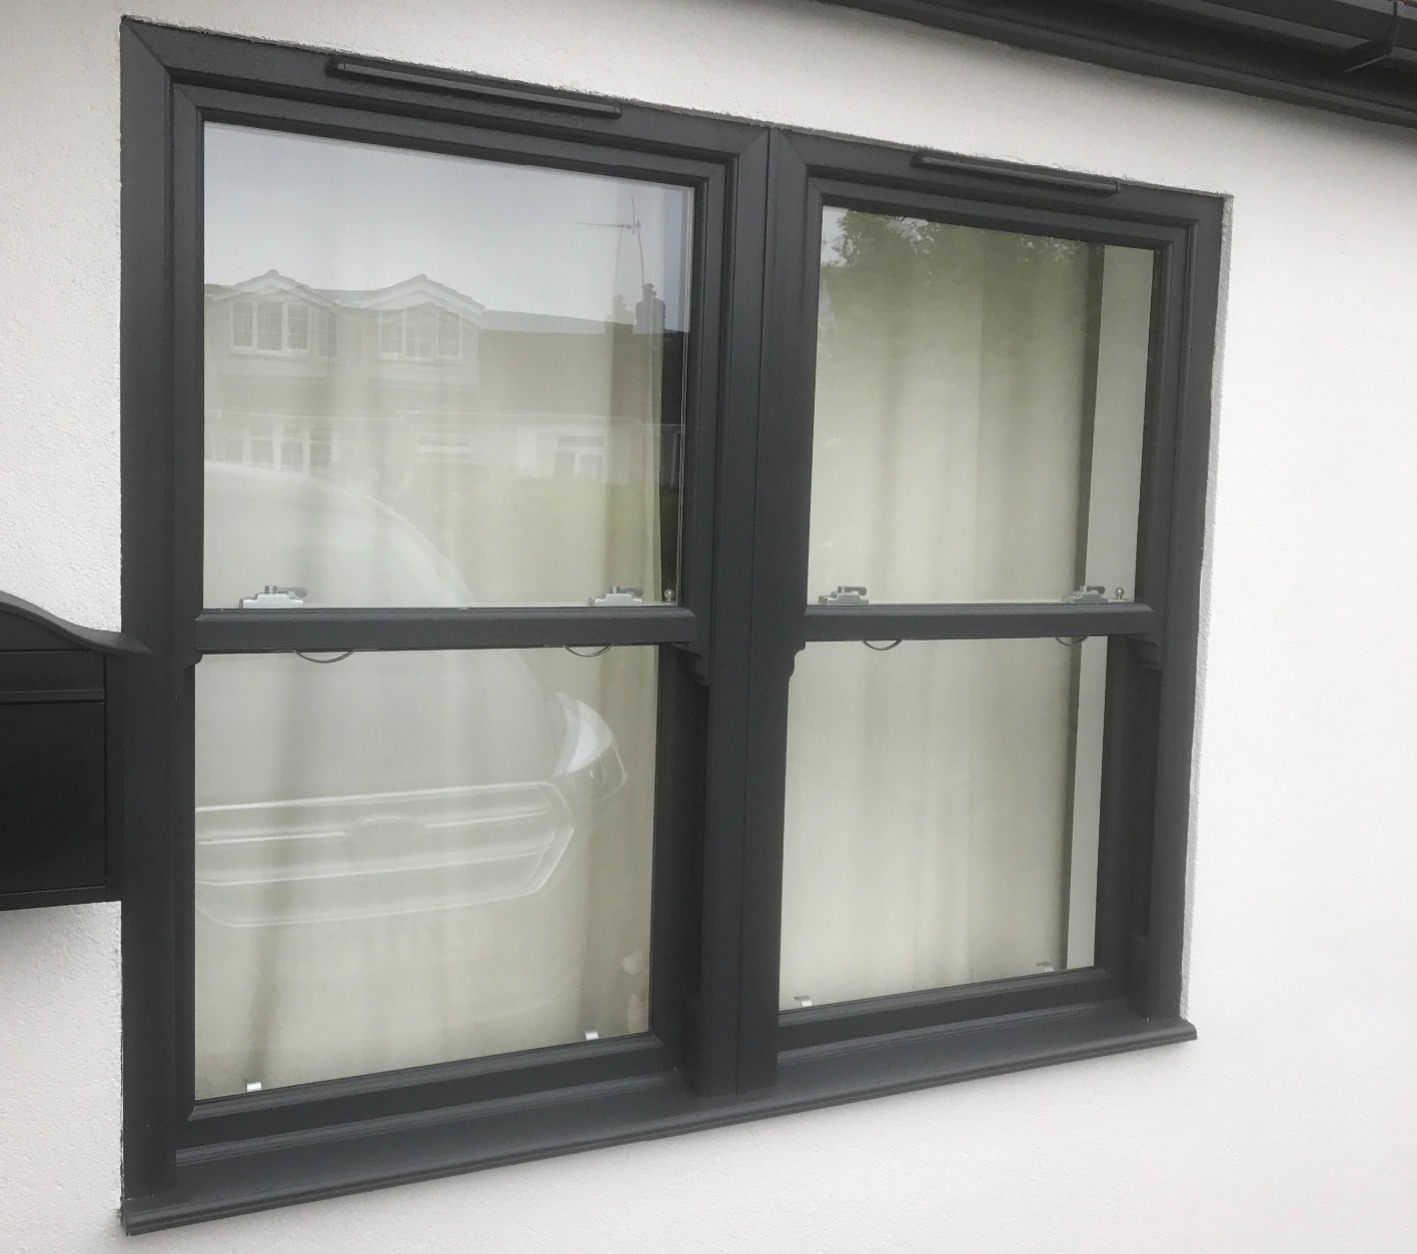 Essex New Windows Period Property